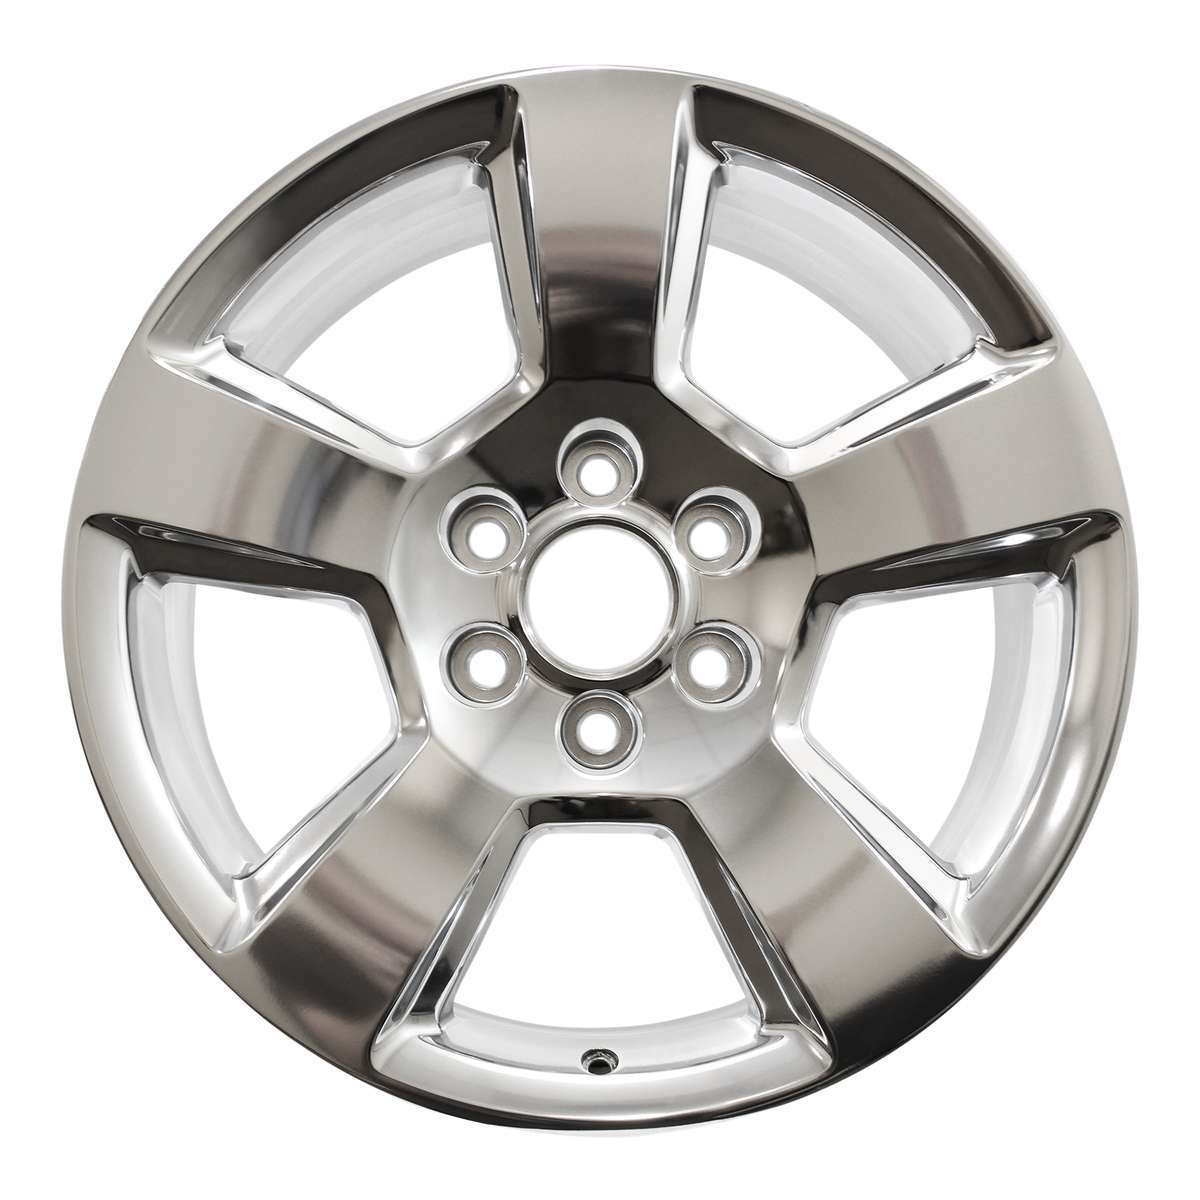 2014 Chevrolet Silverado 1500 20" OEM Wheel Rim W5652P